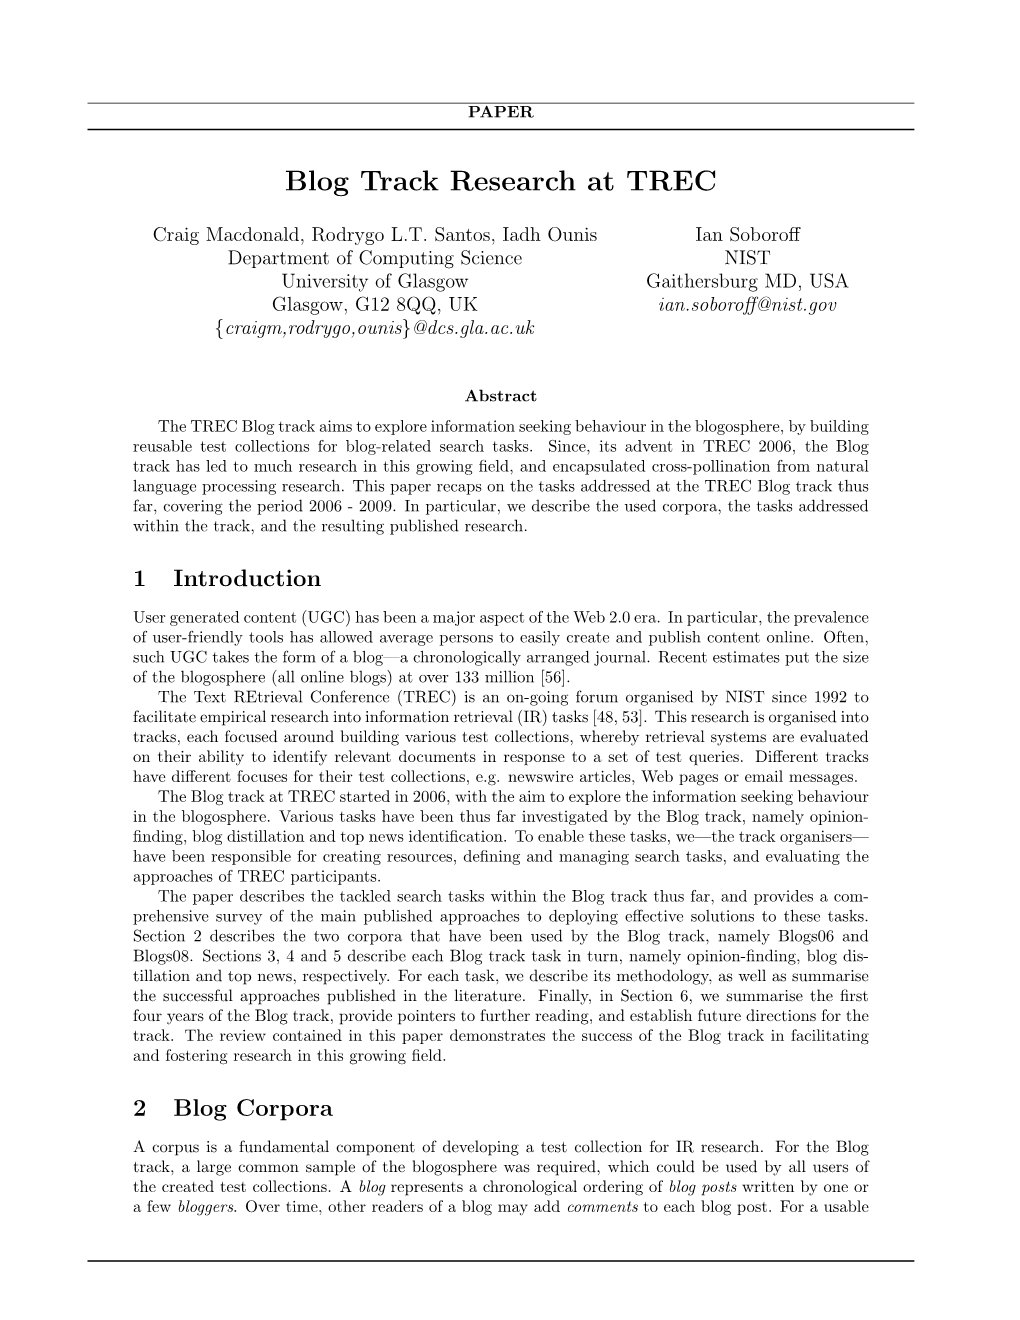 Blog Track Research at TREC